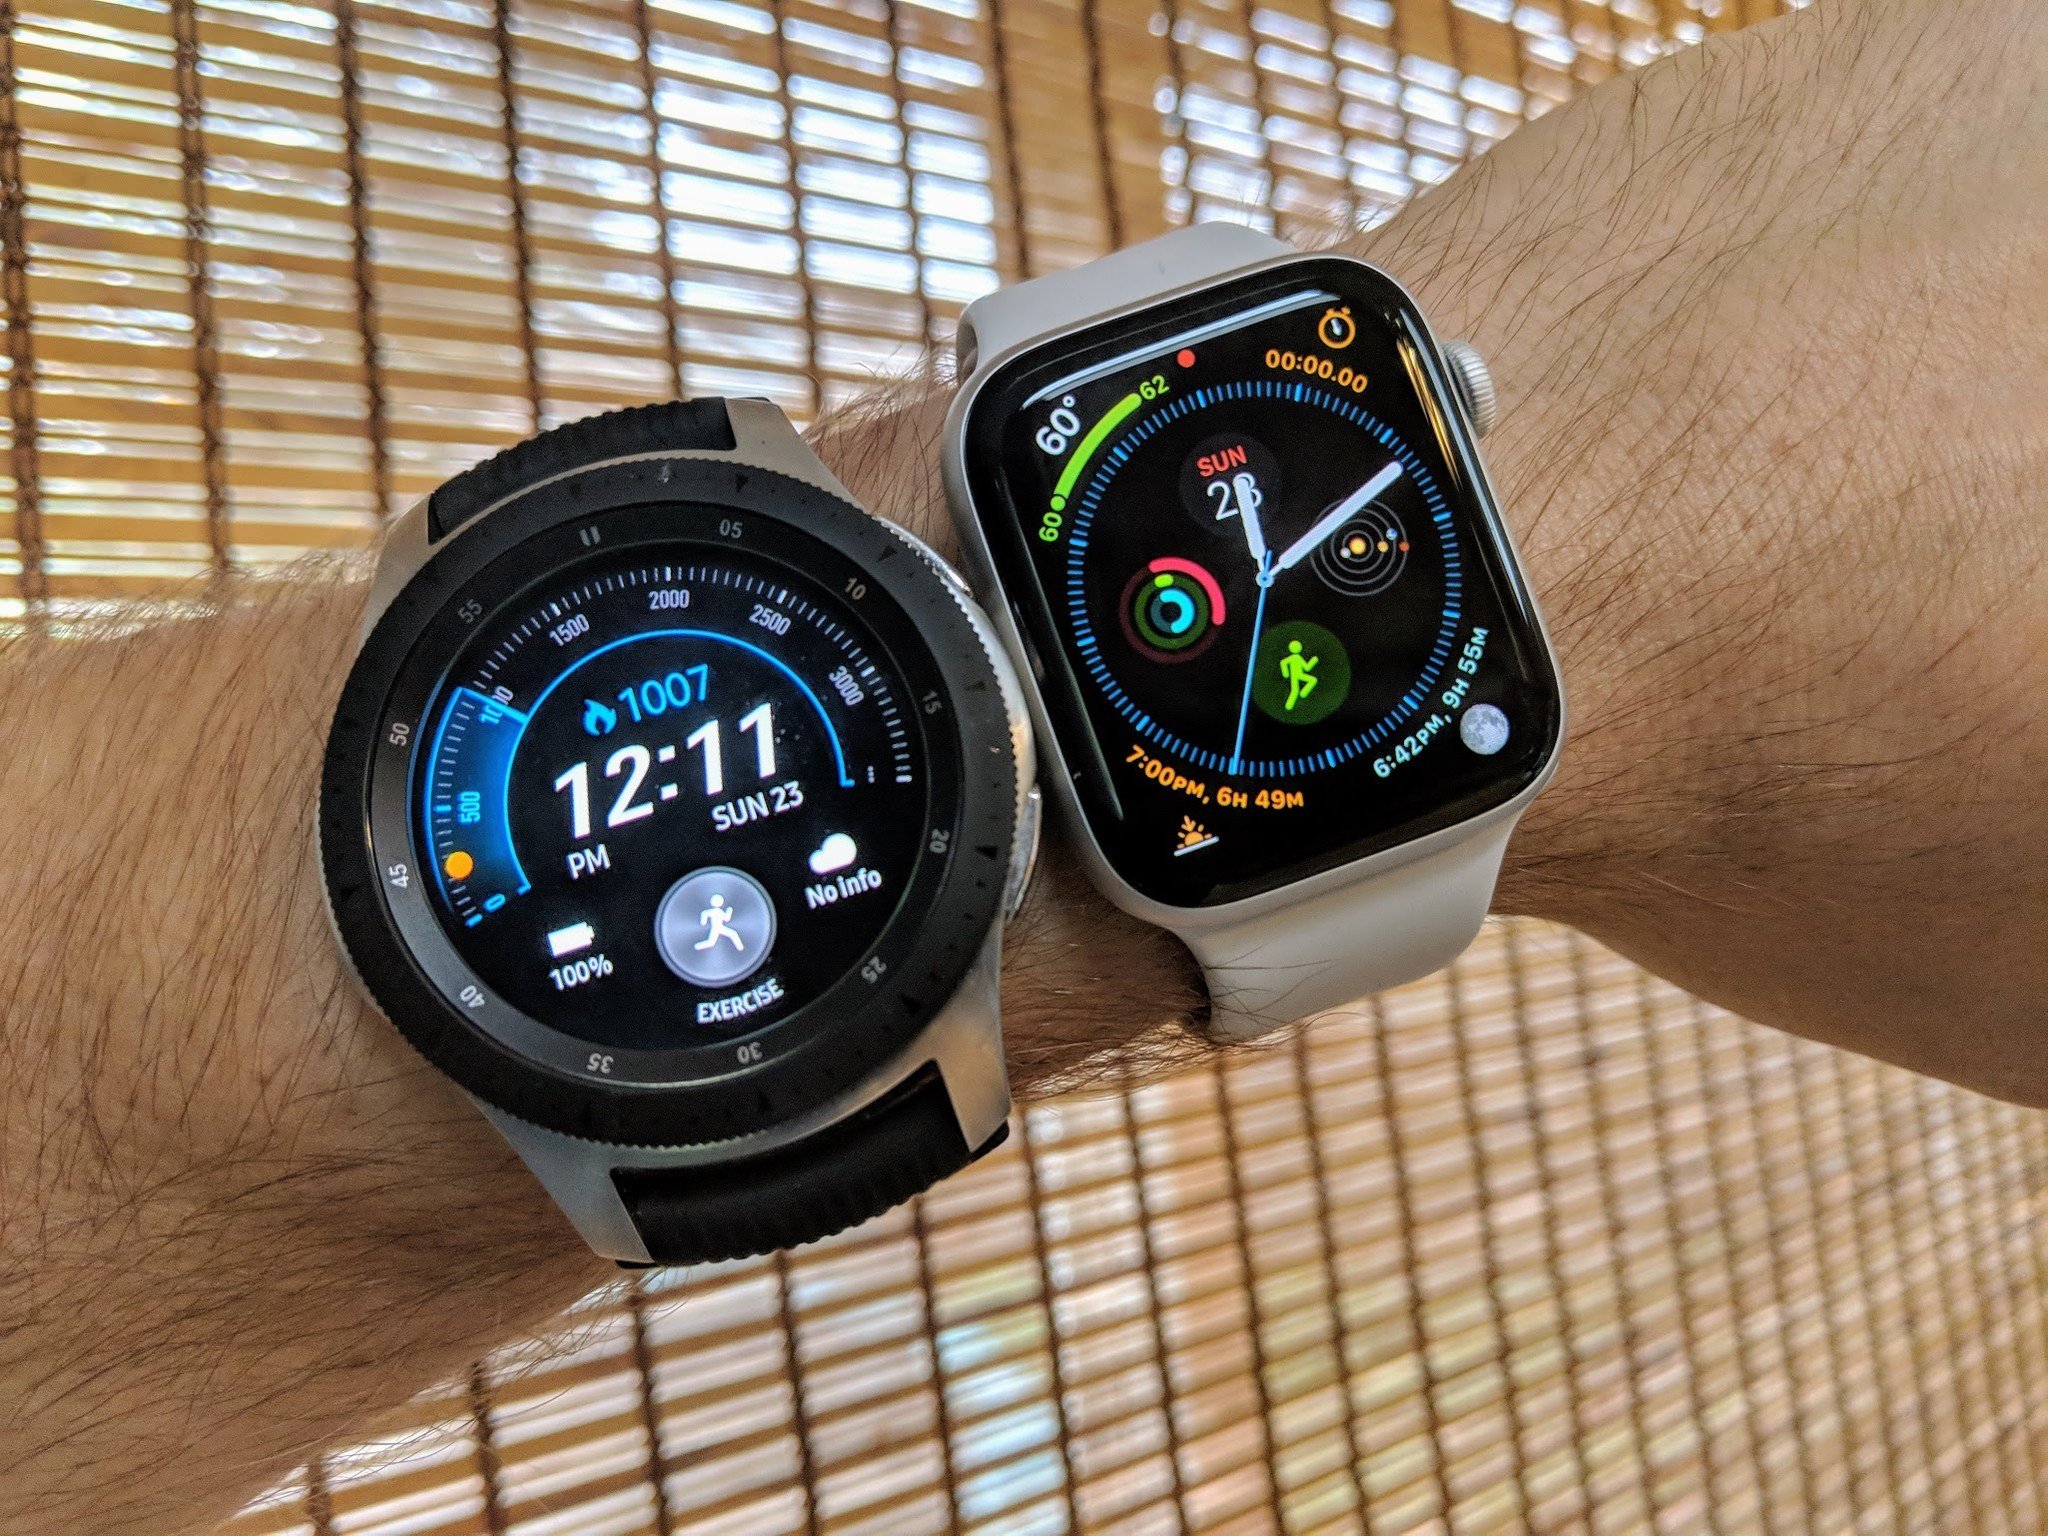 Samsung Galaxy Watch vs. Apple Watch 